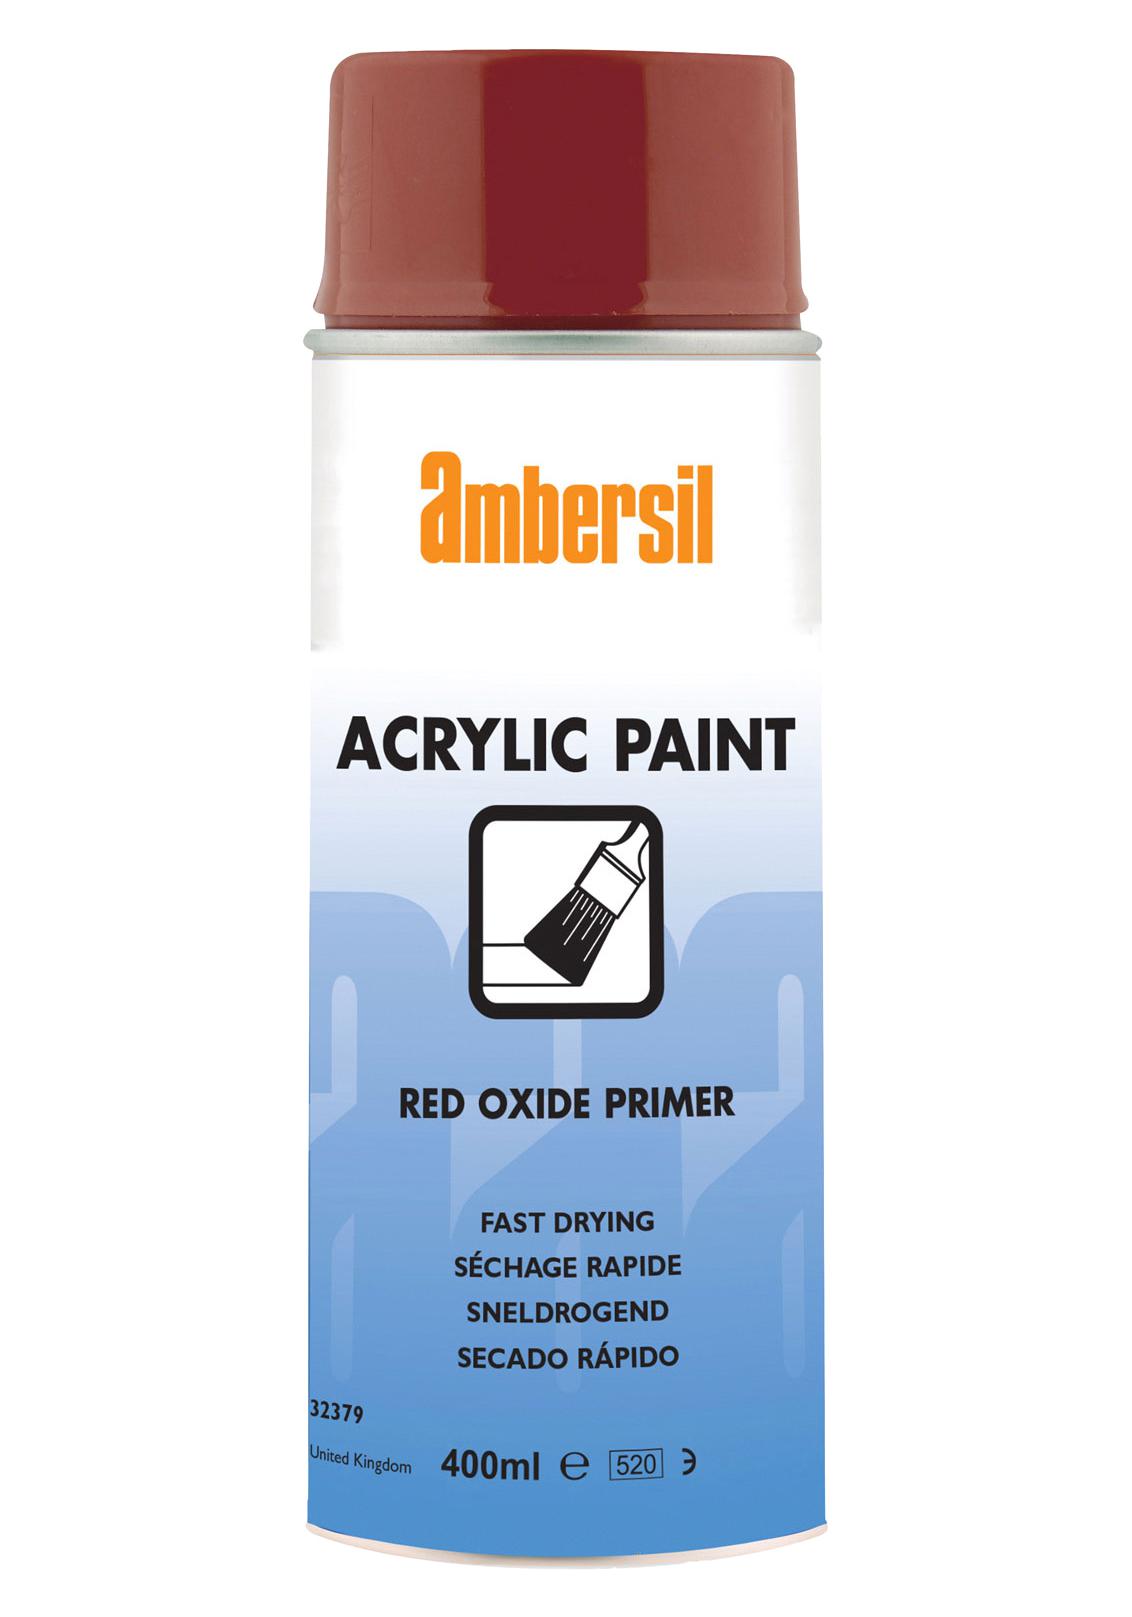 Ambersil Acrylic Paint, Red Oxide Primer, 400Ml Conformal Coating, Aerosol, Red, 400Ml